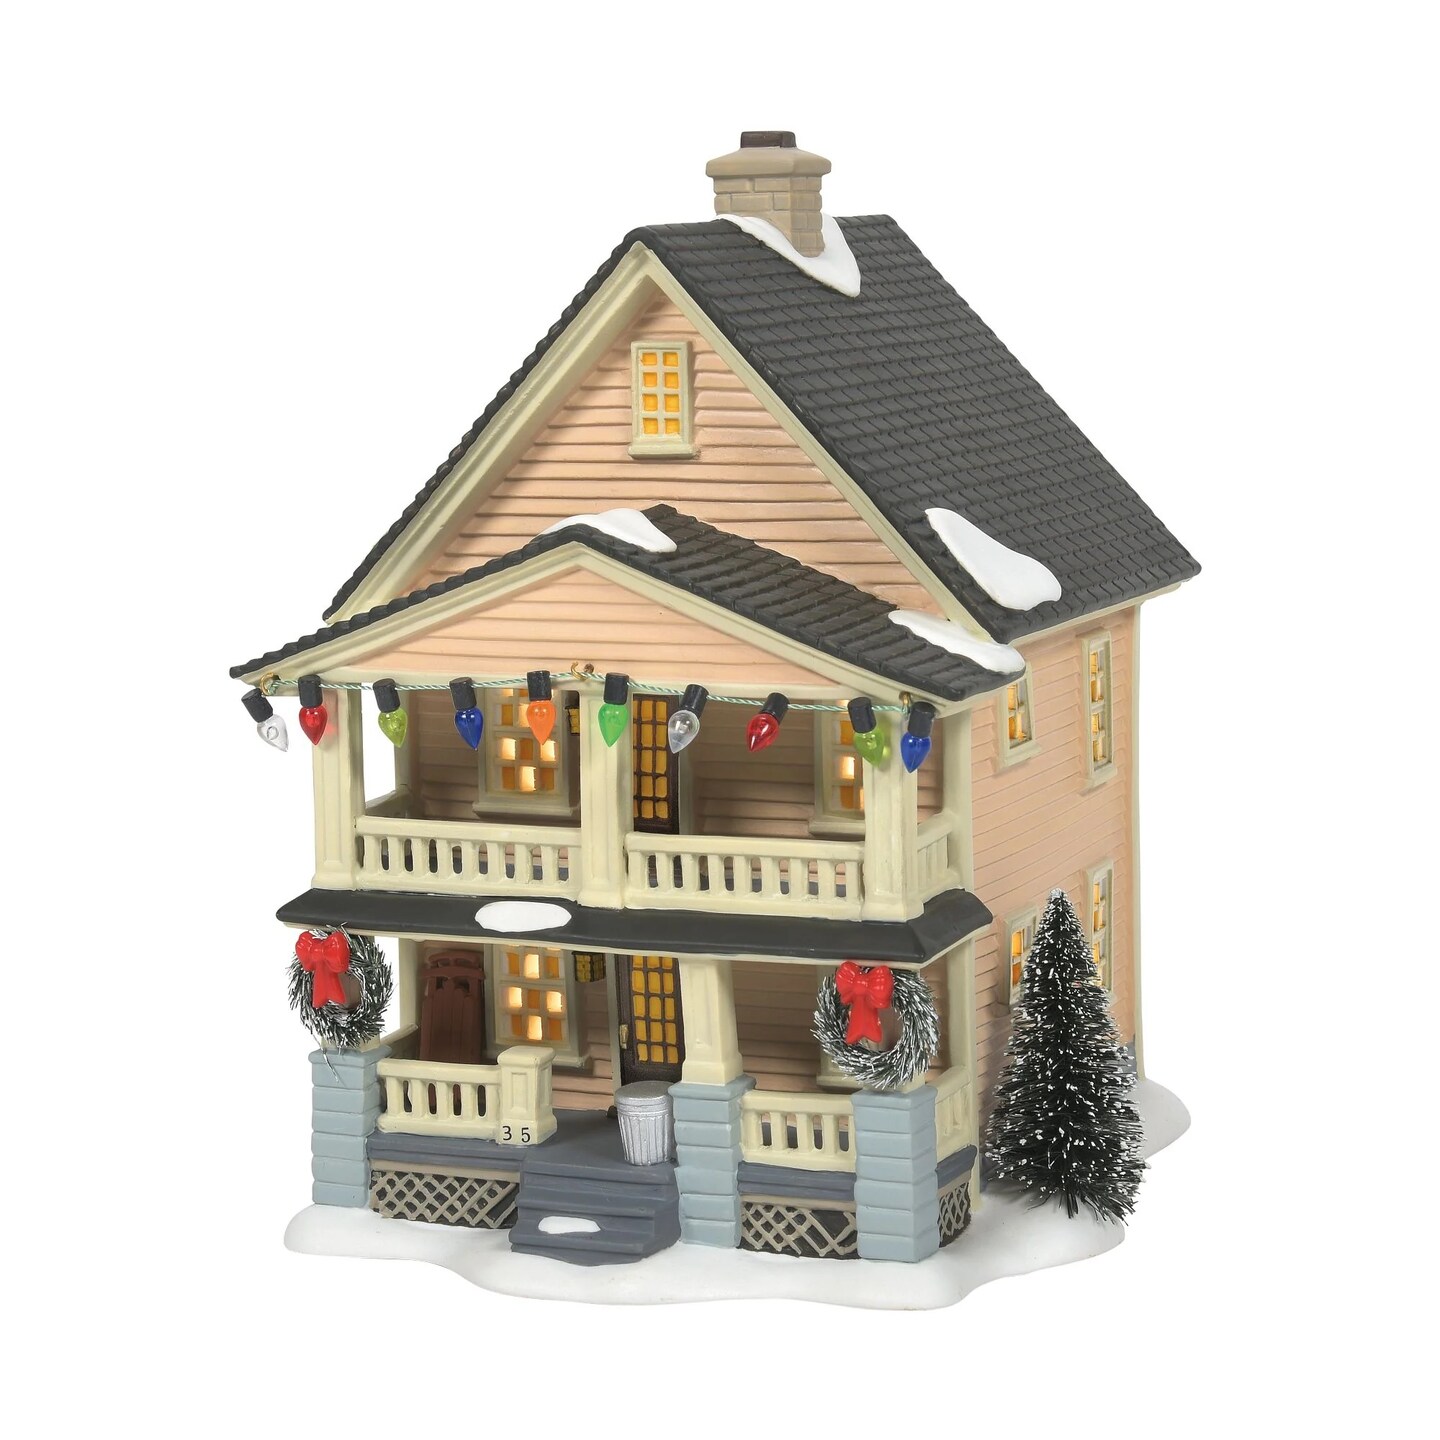 Department 56 Department 56 Schwartz&#x27;s House Lighted Christmas Figurine #6009756